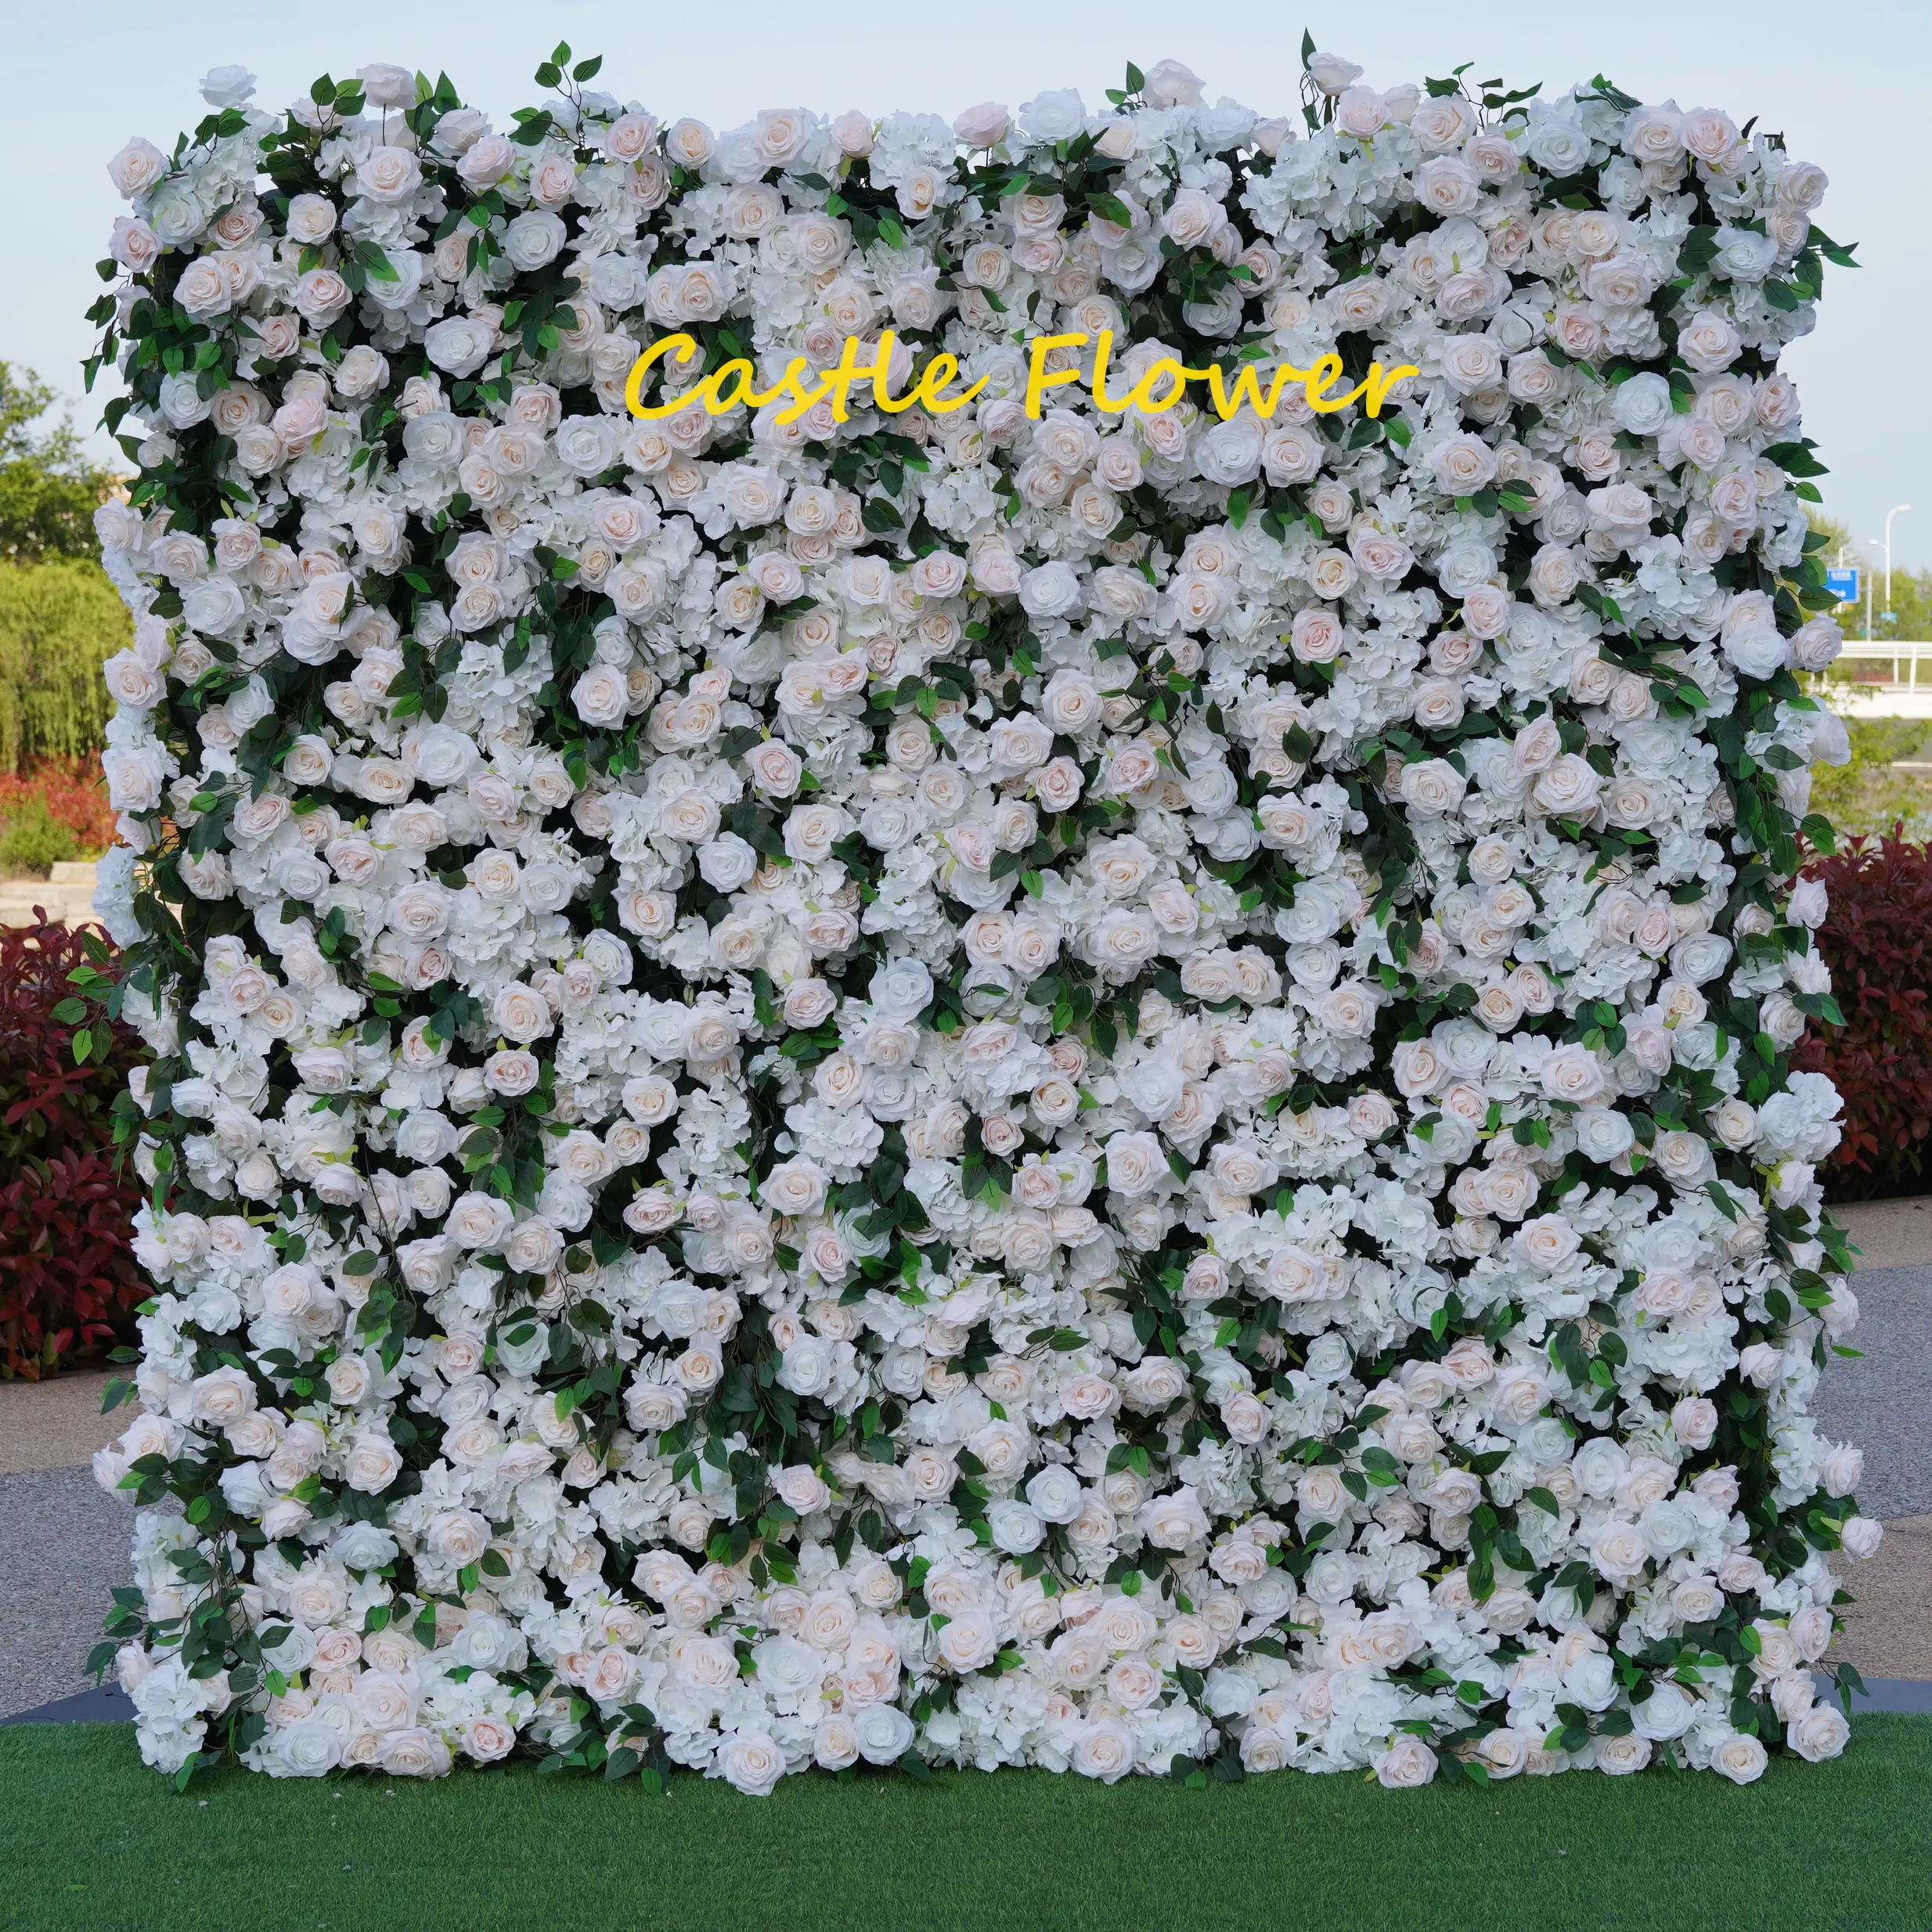 O-W001 Customized Wedding Decor 5D Roll Up Cloth Flower Walls Pink Rose Wedding Artificial Silk Flower Wall Panel Backdrop